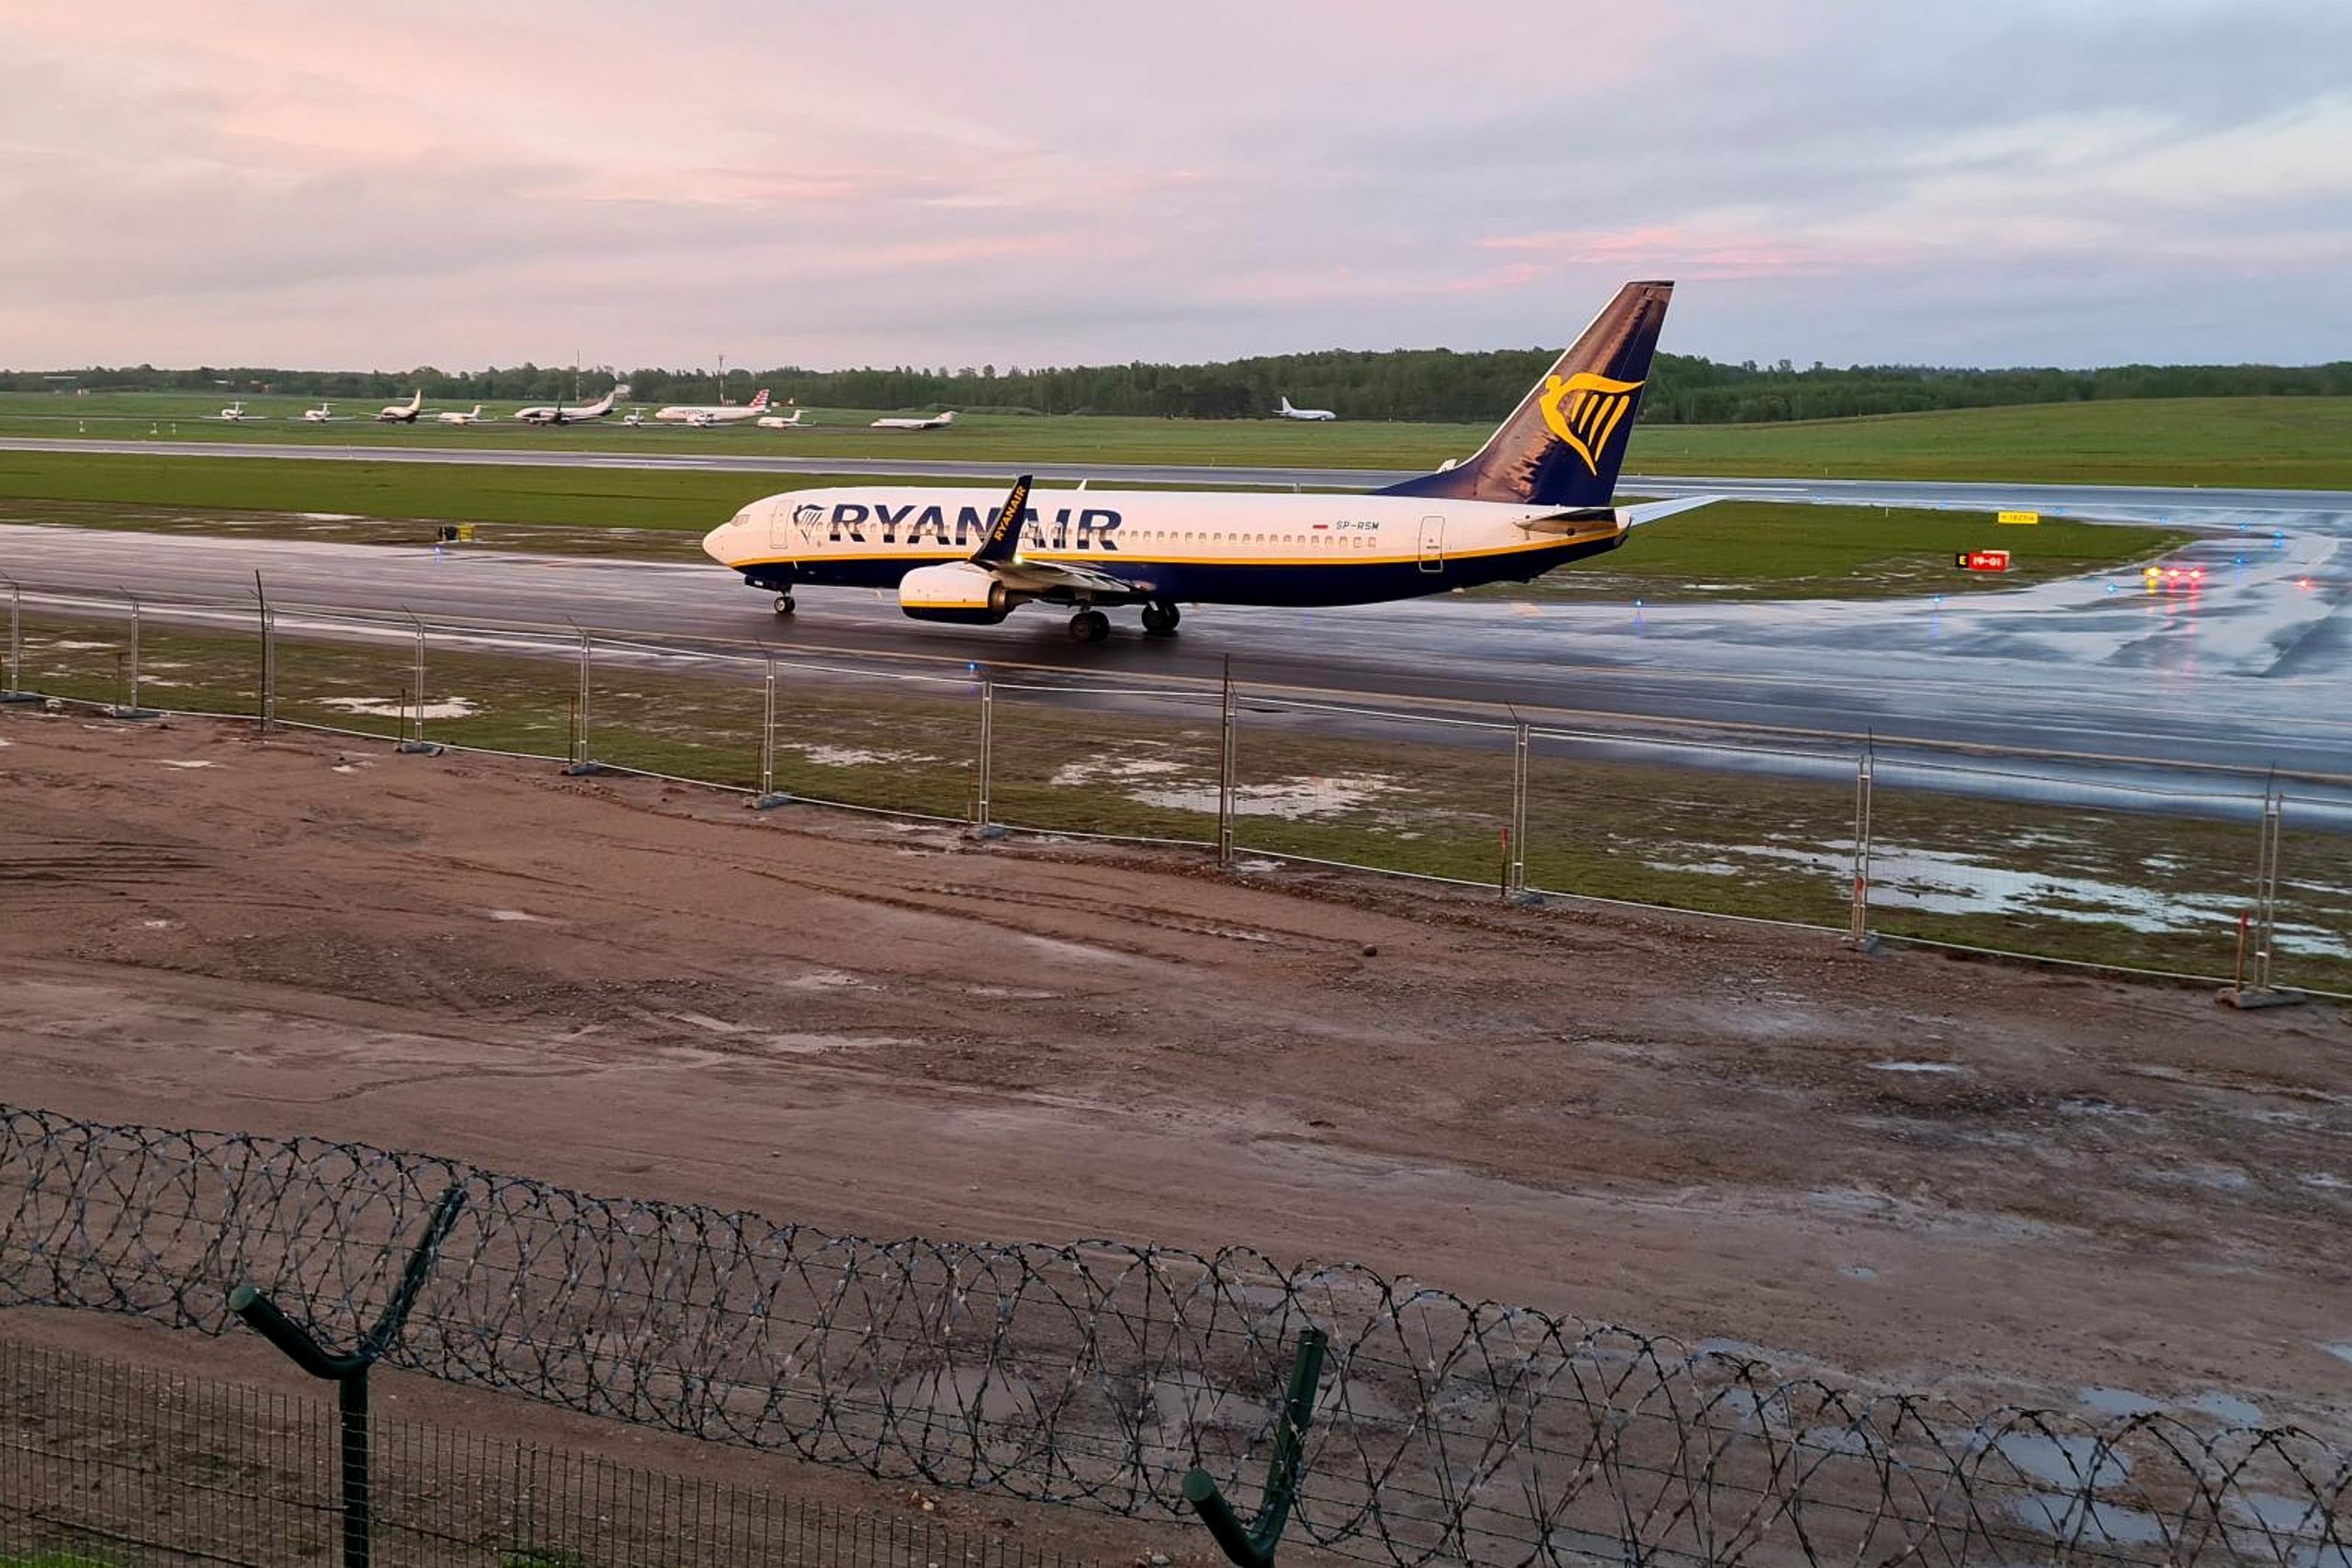 Ryanair: Oι αρχές της Λευκορωσίας αρνήθηκαν το αίτημα του πιλότου να επικοινωνήσει με την εταιρεία